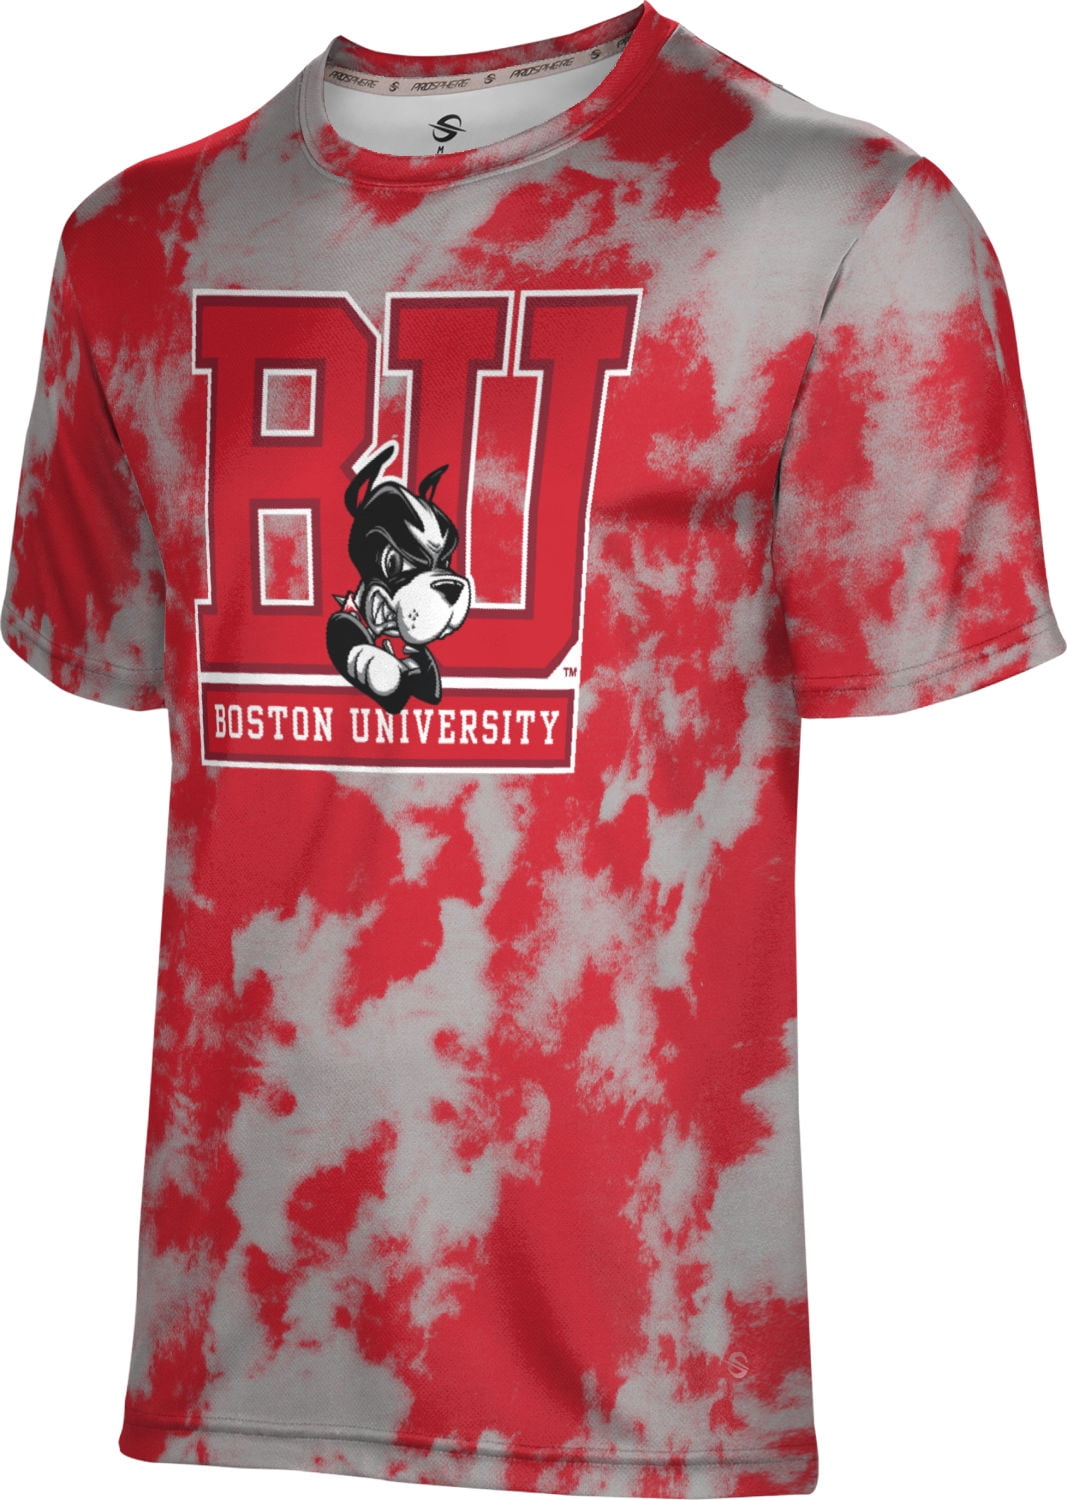 ProSphere Boston University Mens Performance T-Shirt Grunge